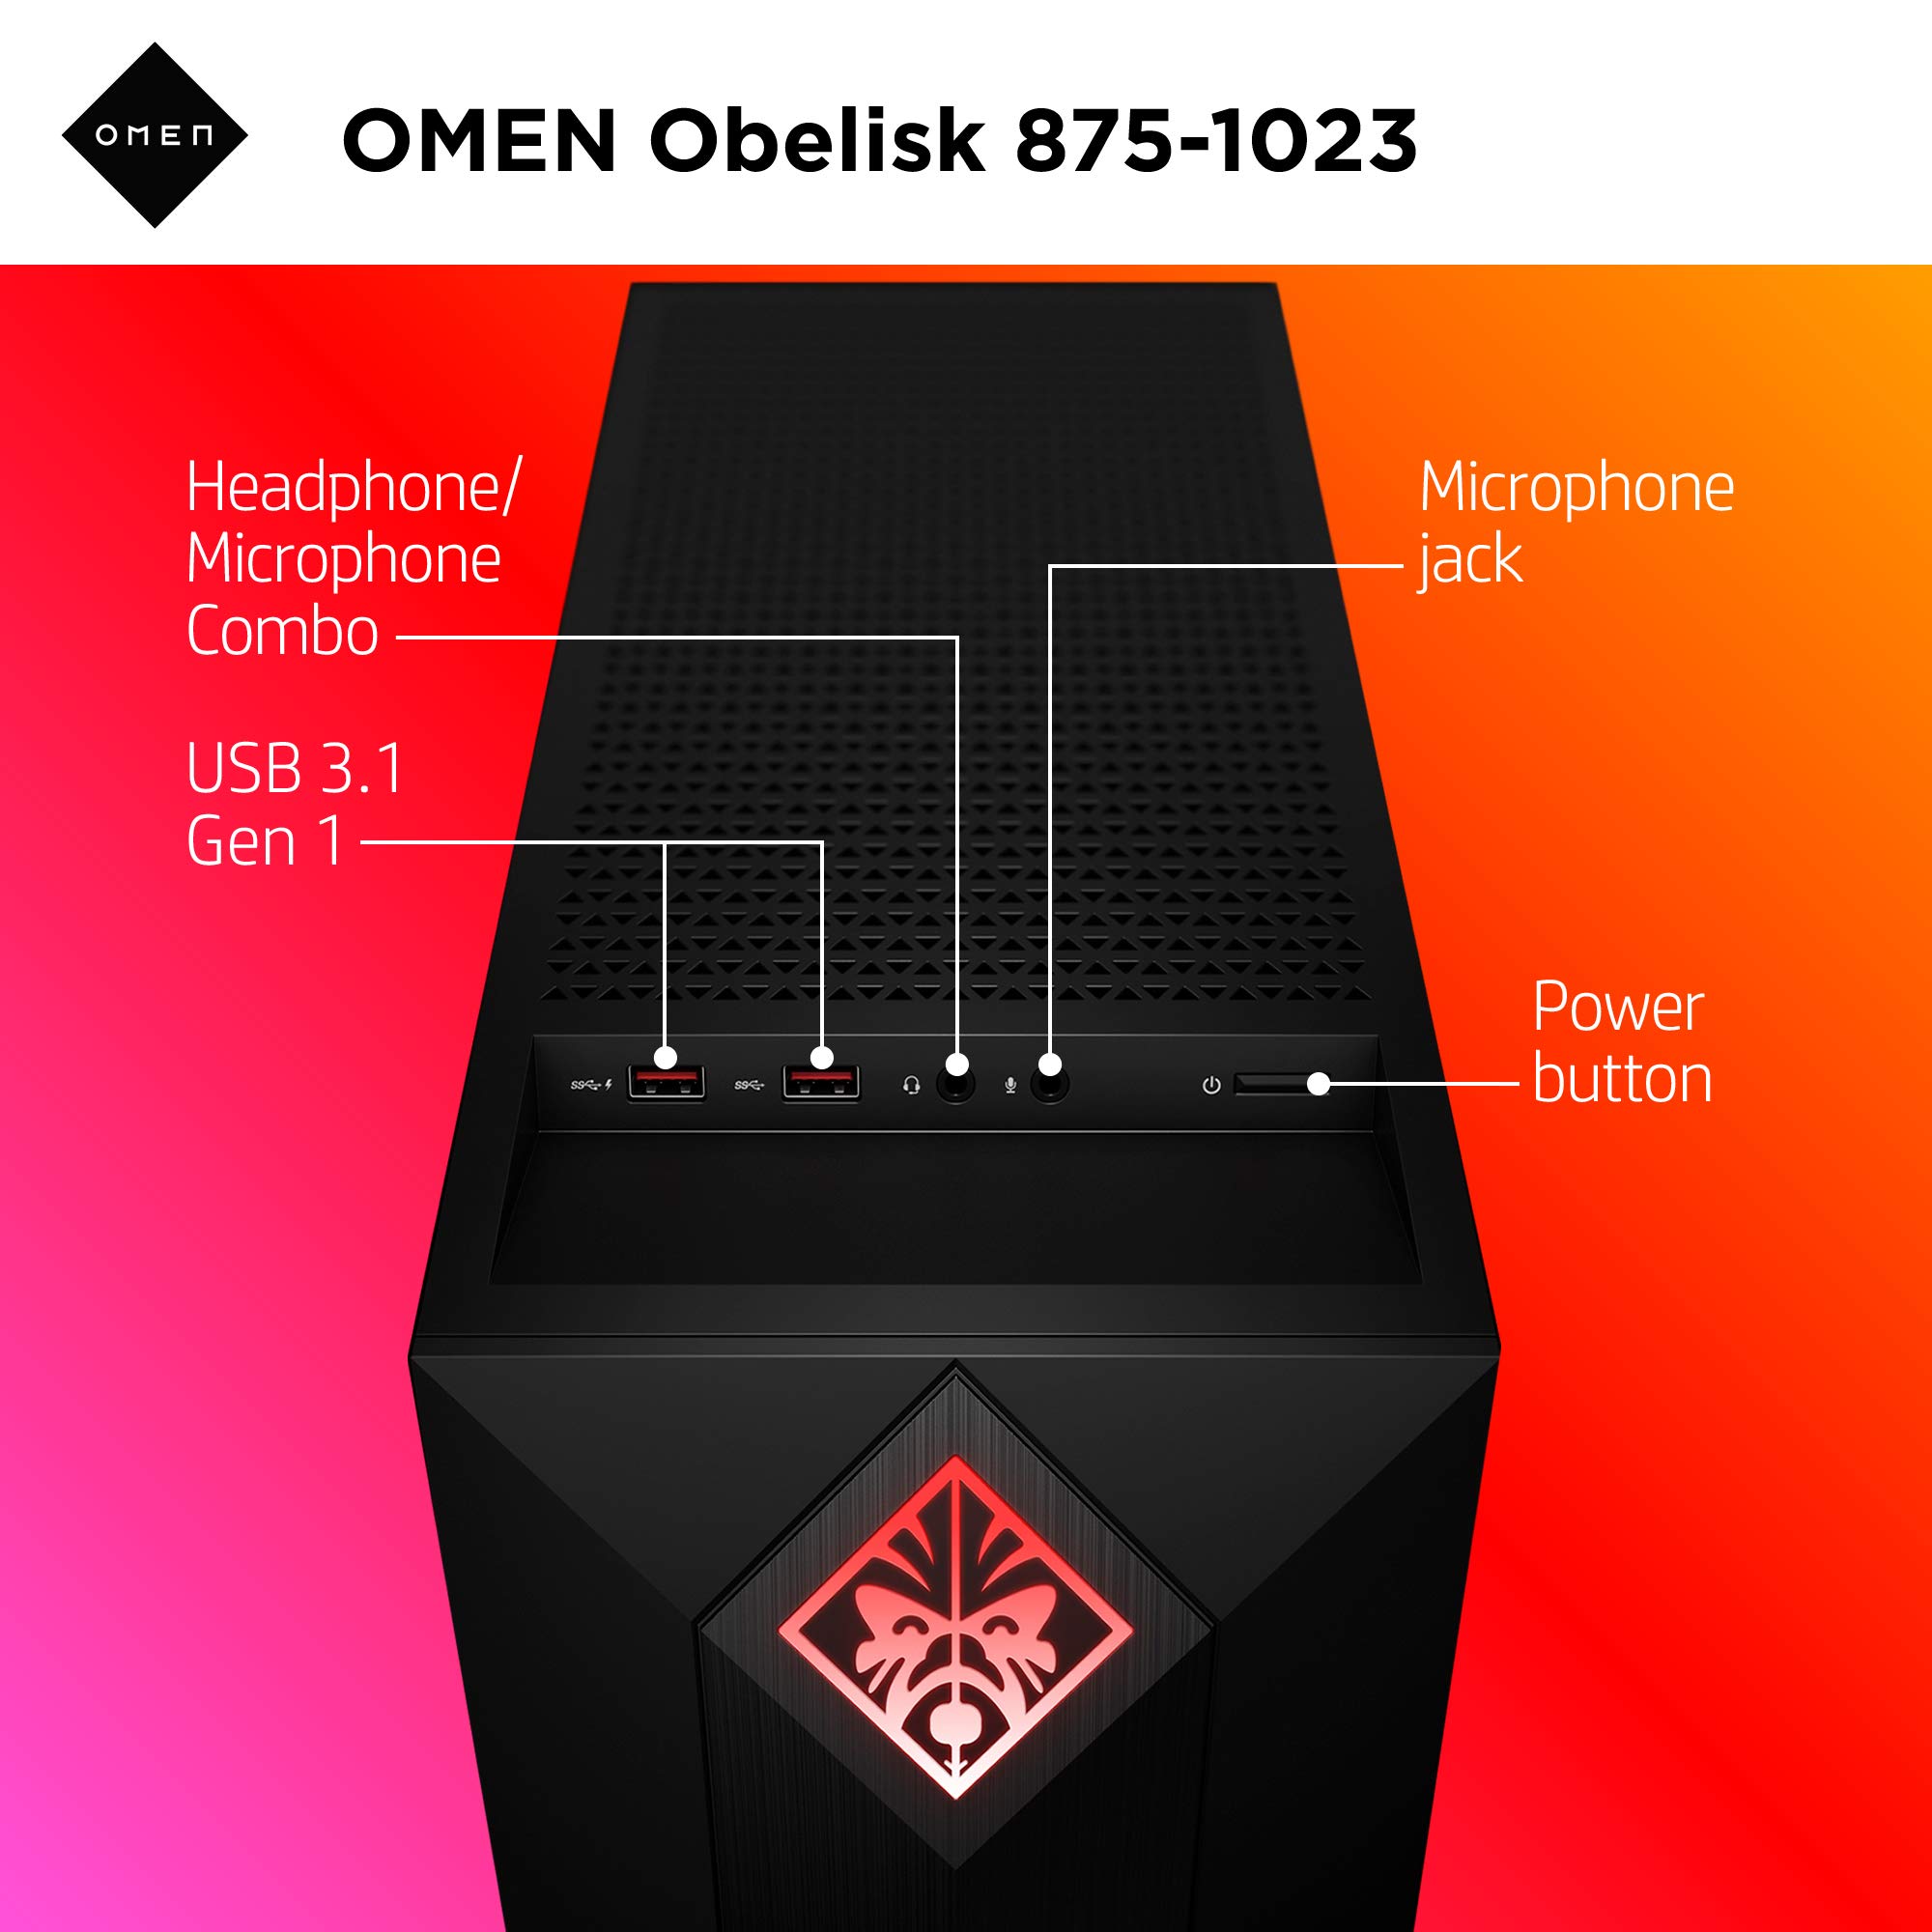 Omen by HP Obelisk Gaming Desktop Computer, 9th Generation Intel Core i9-9900K Processor, NVIDIA GeForce RTX 2080 SUPER 8 GB, HyperX 32 GB RAM, 1 TB SSD, VR Ready, Windows 10 Home (875-1023, Black)